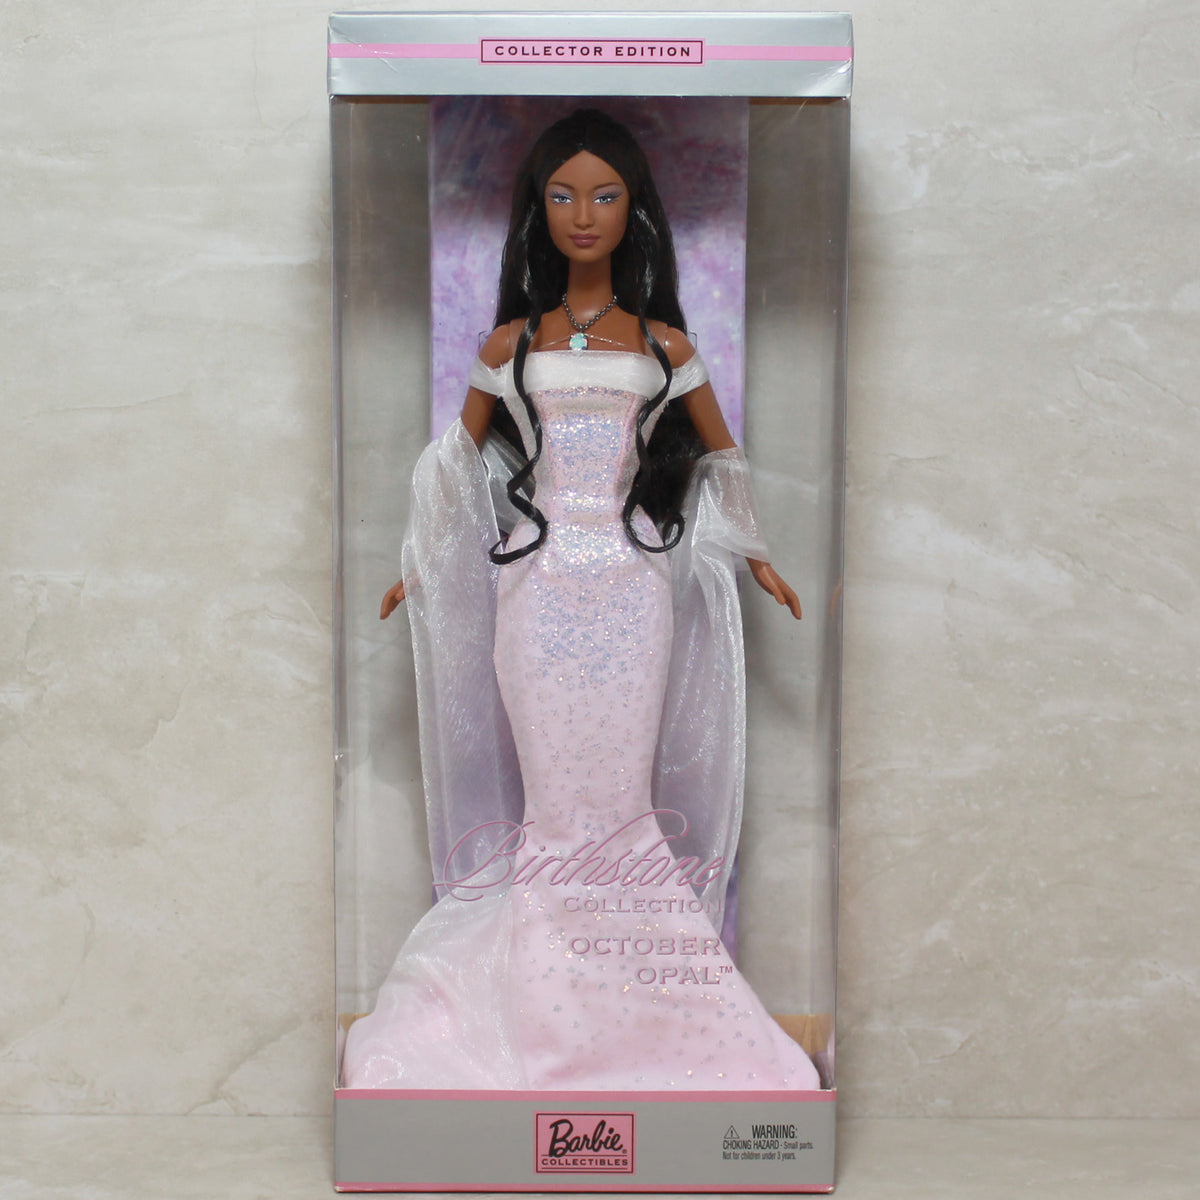 Barbie C0580 MIB 2002 Birthstone October Opal African American 